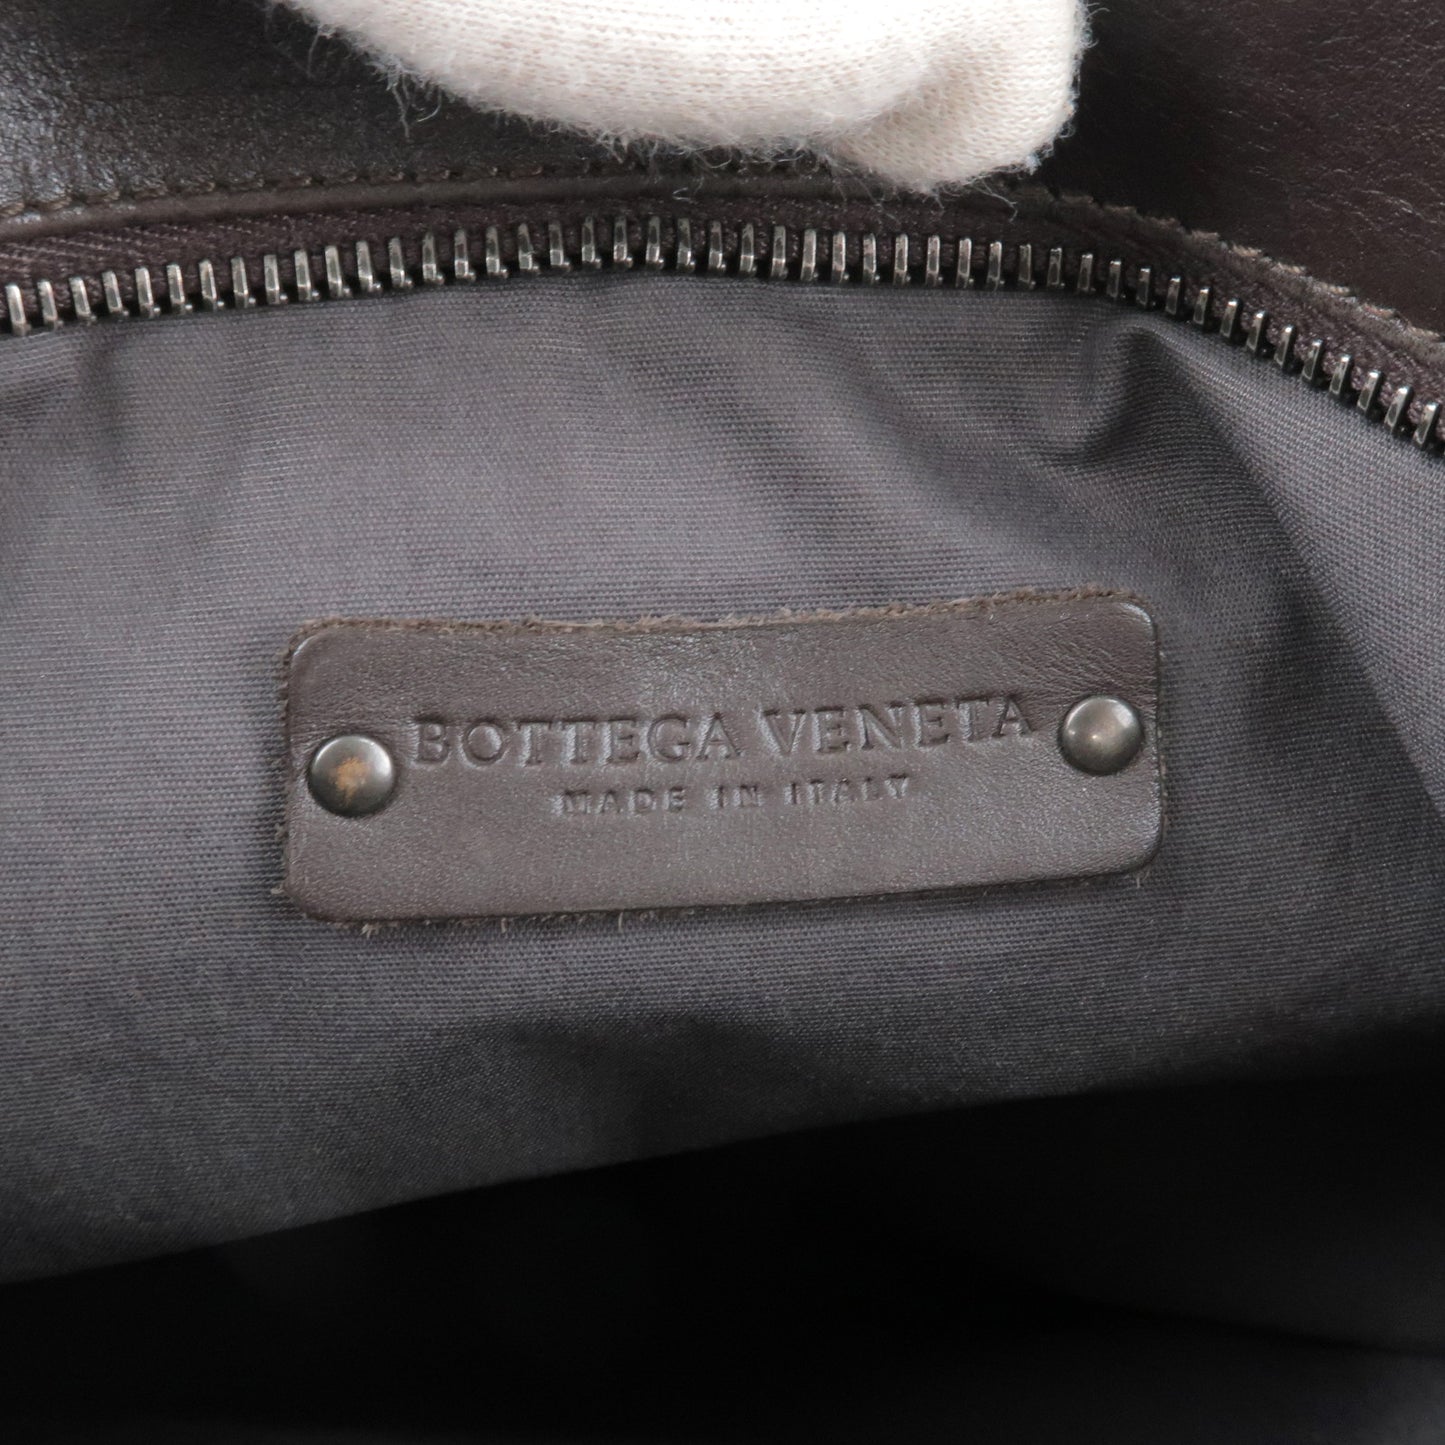 BOTTEGA VENETA Intrecciato Leather Shoulder Bag Brown